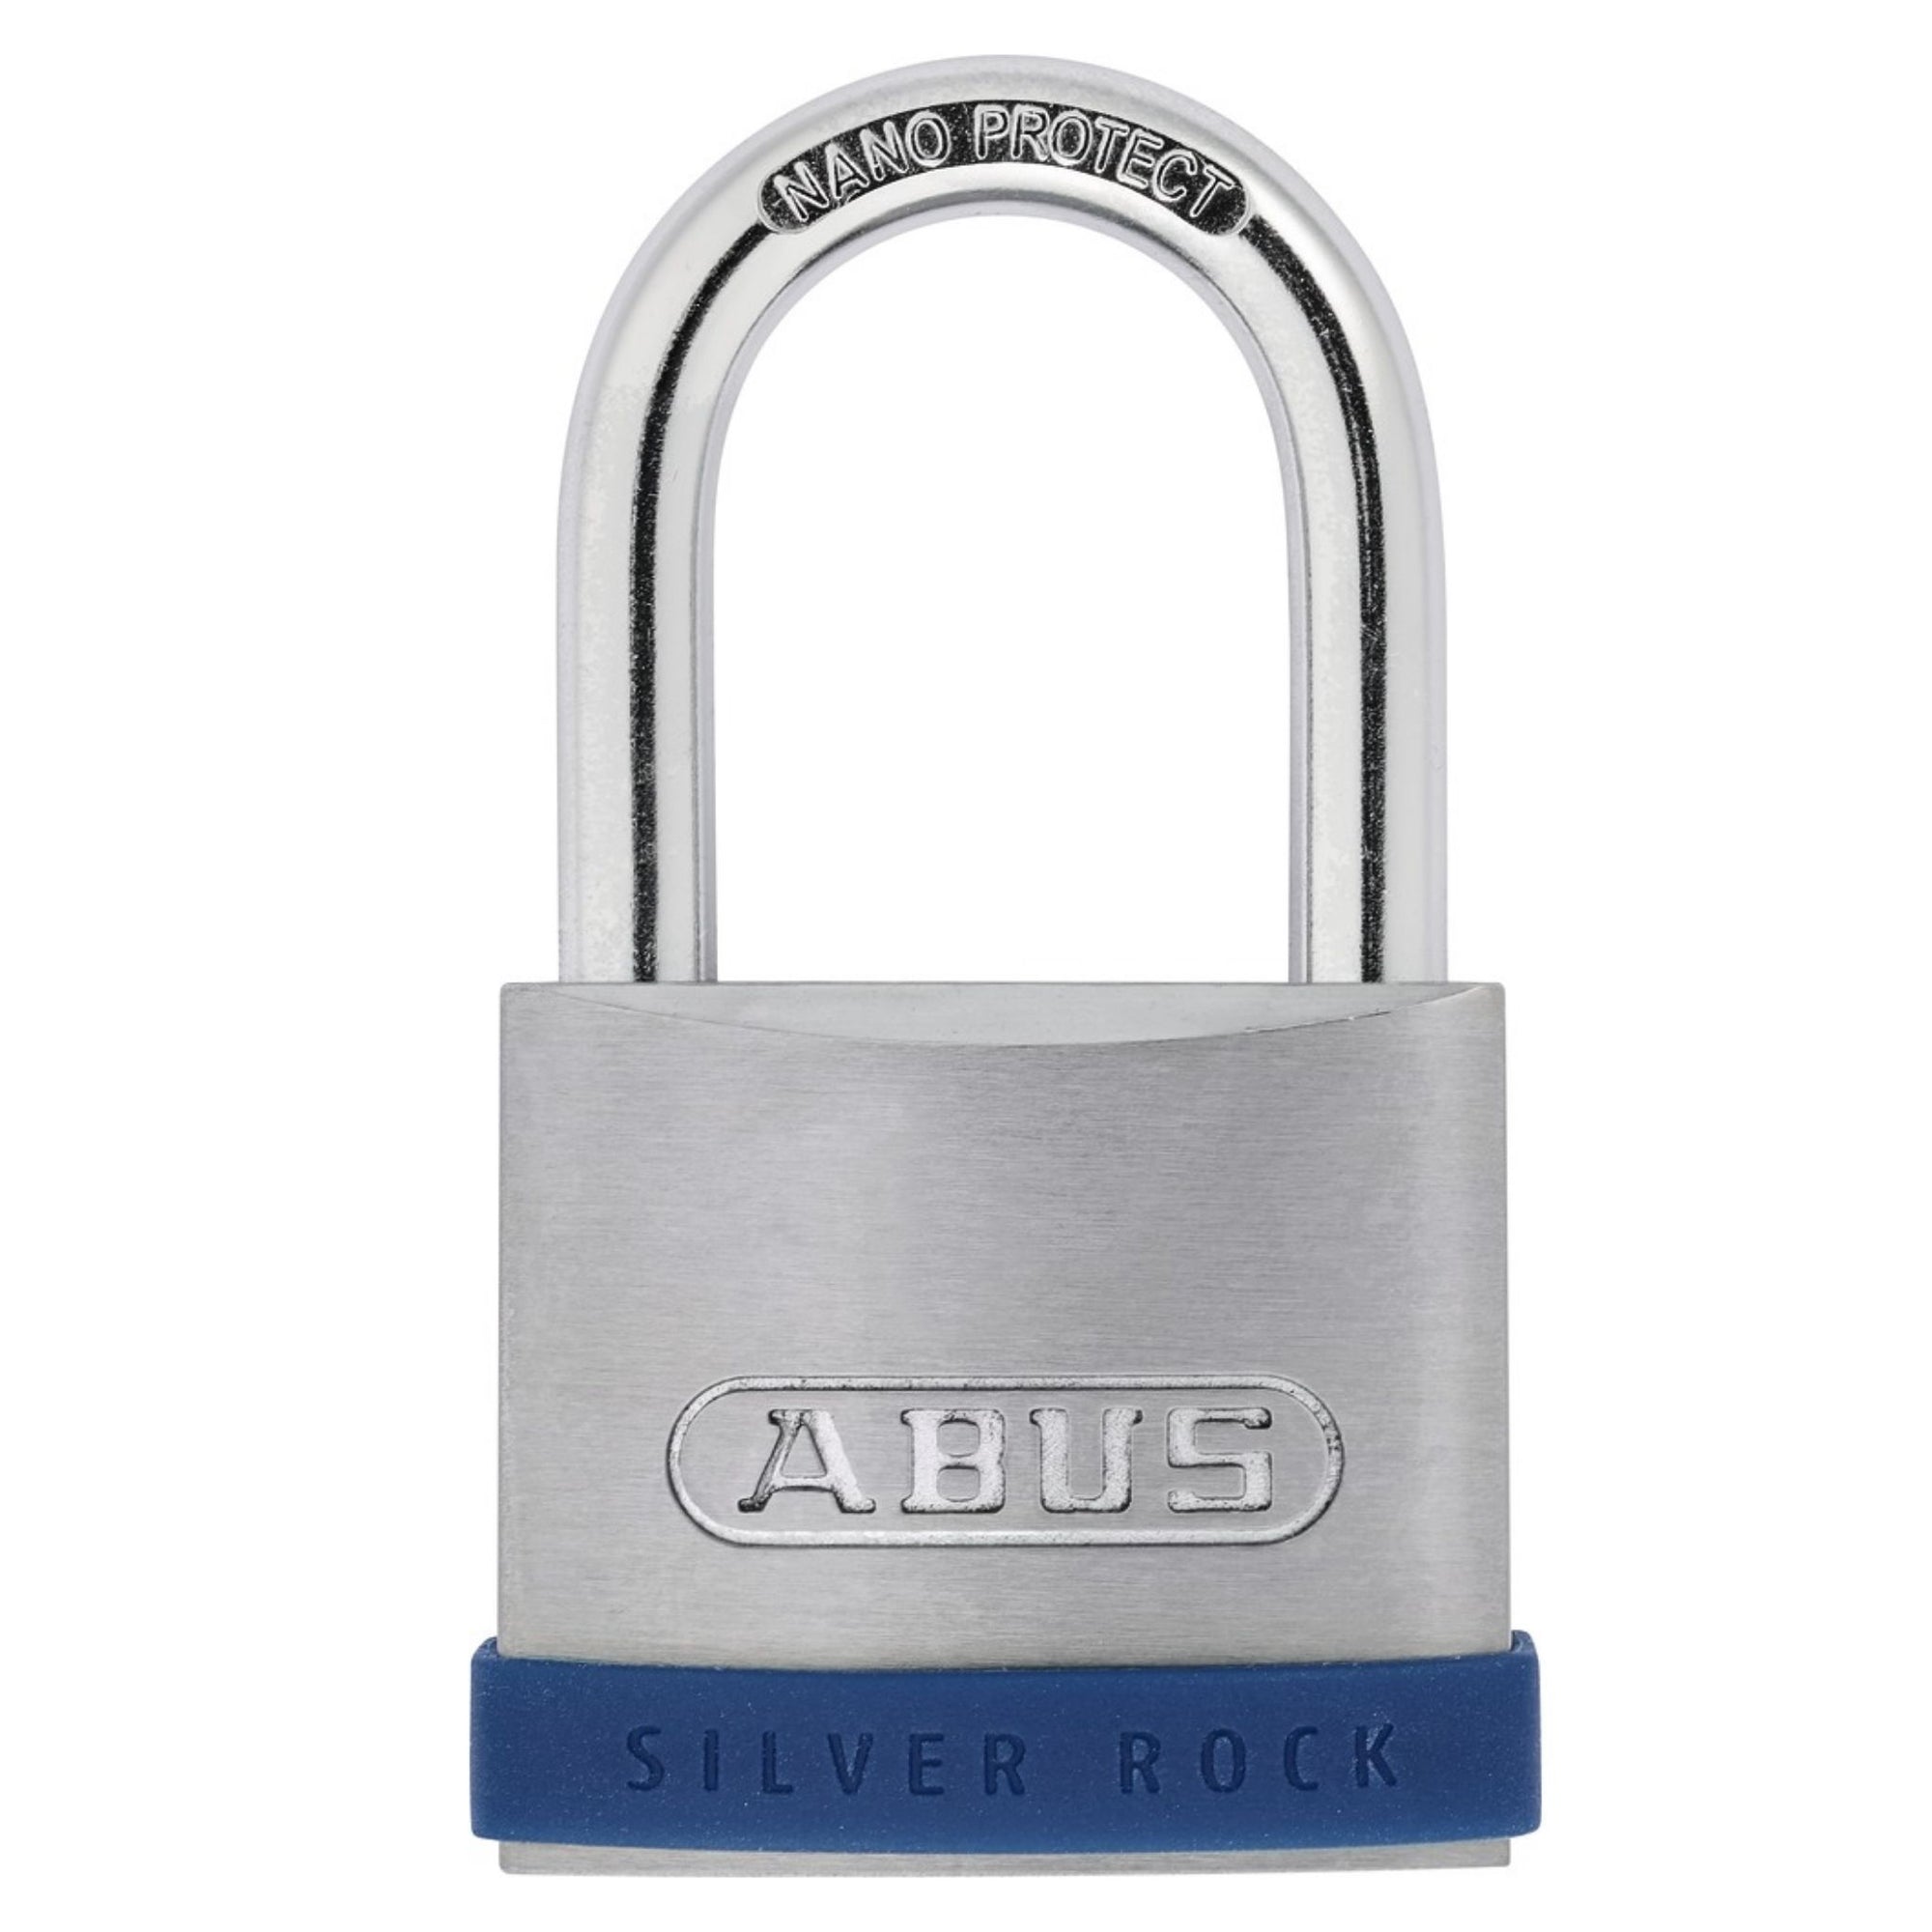 Abus 5/50HB25 KA # 6517 Padlock Silver Rock Zinc Locks Keyed Alike to KA# 6517 for Toolbox Security - The Lock Source